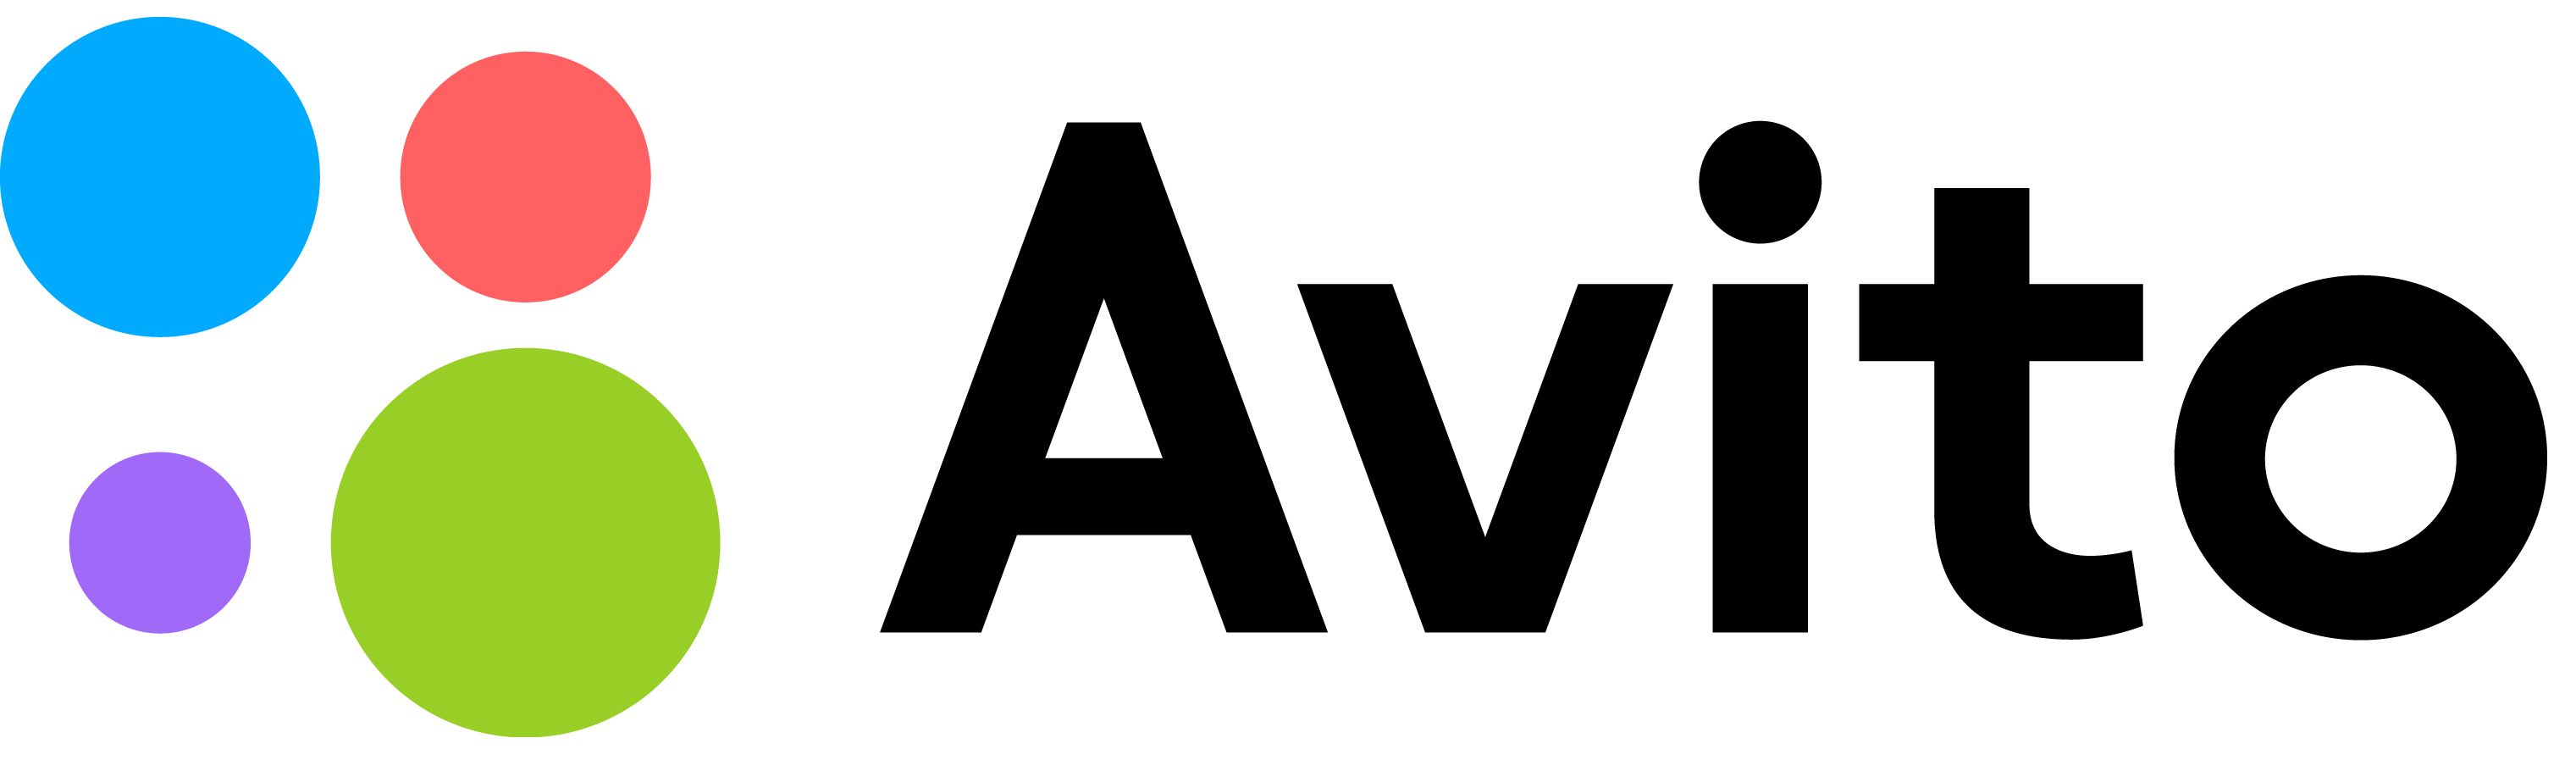 Https d 18 ru. Авито логотип. Логотип авито на прозрачном фоне. Авито маркетплейс. Avito значок.